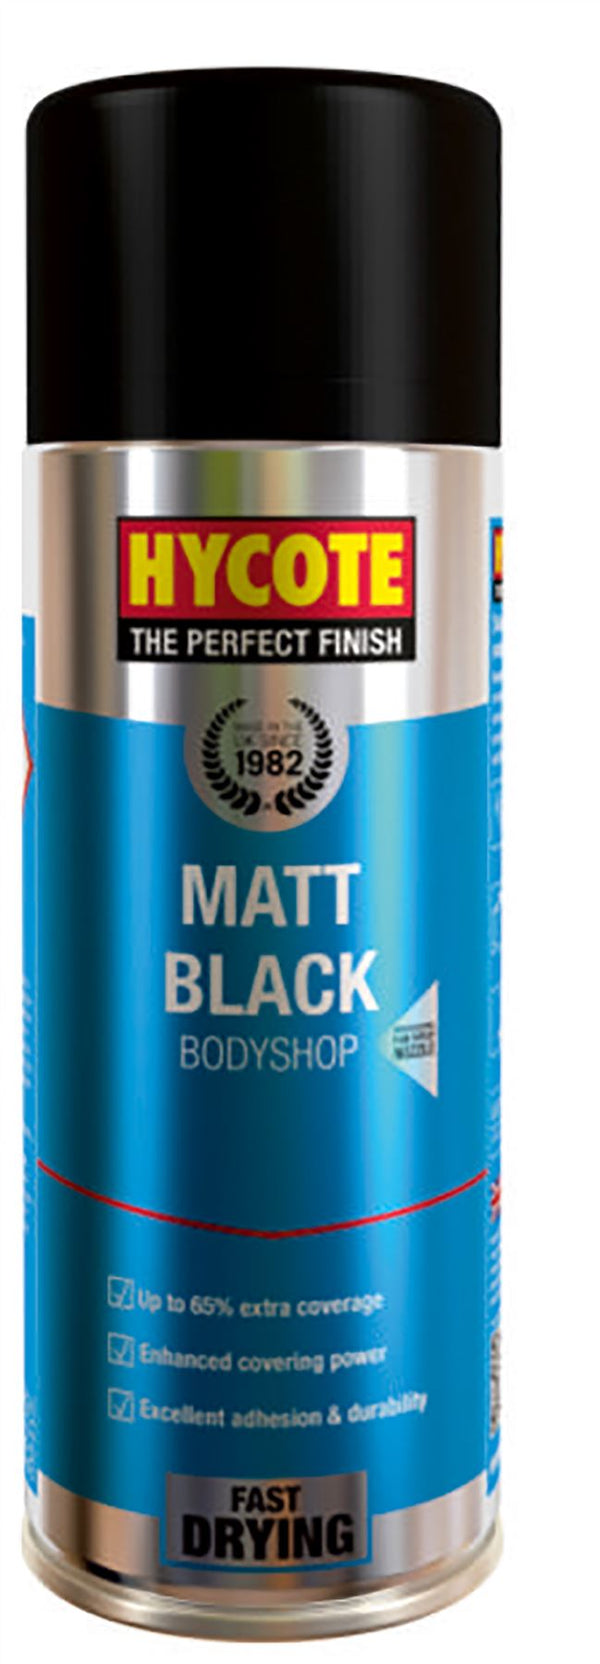 Hycote Bodyshop Matt Black Paint - 400ml